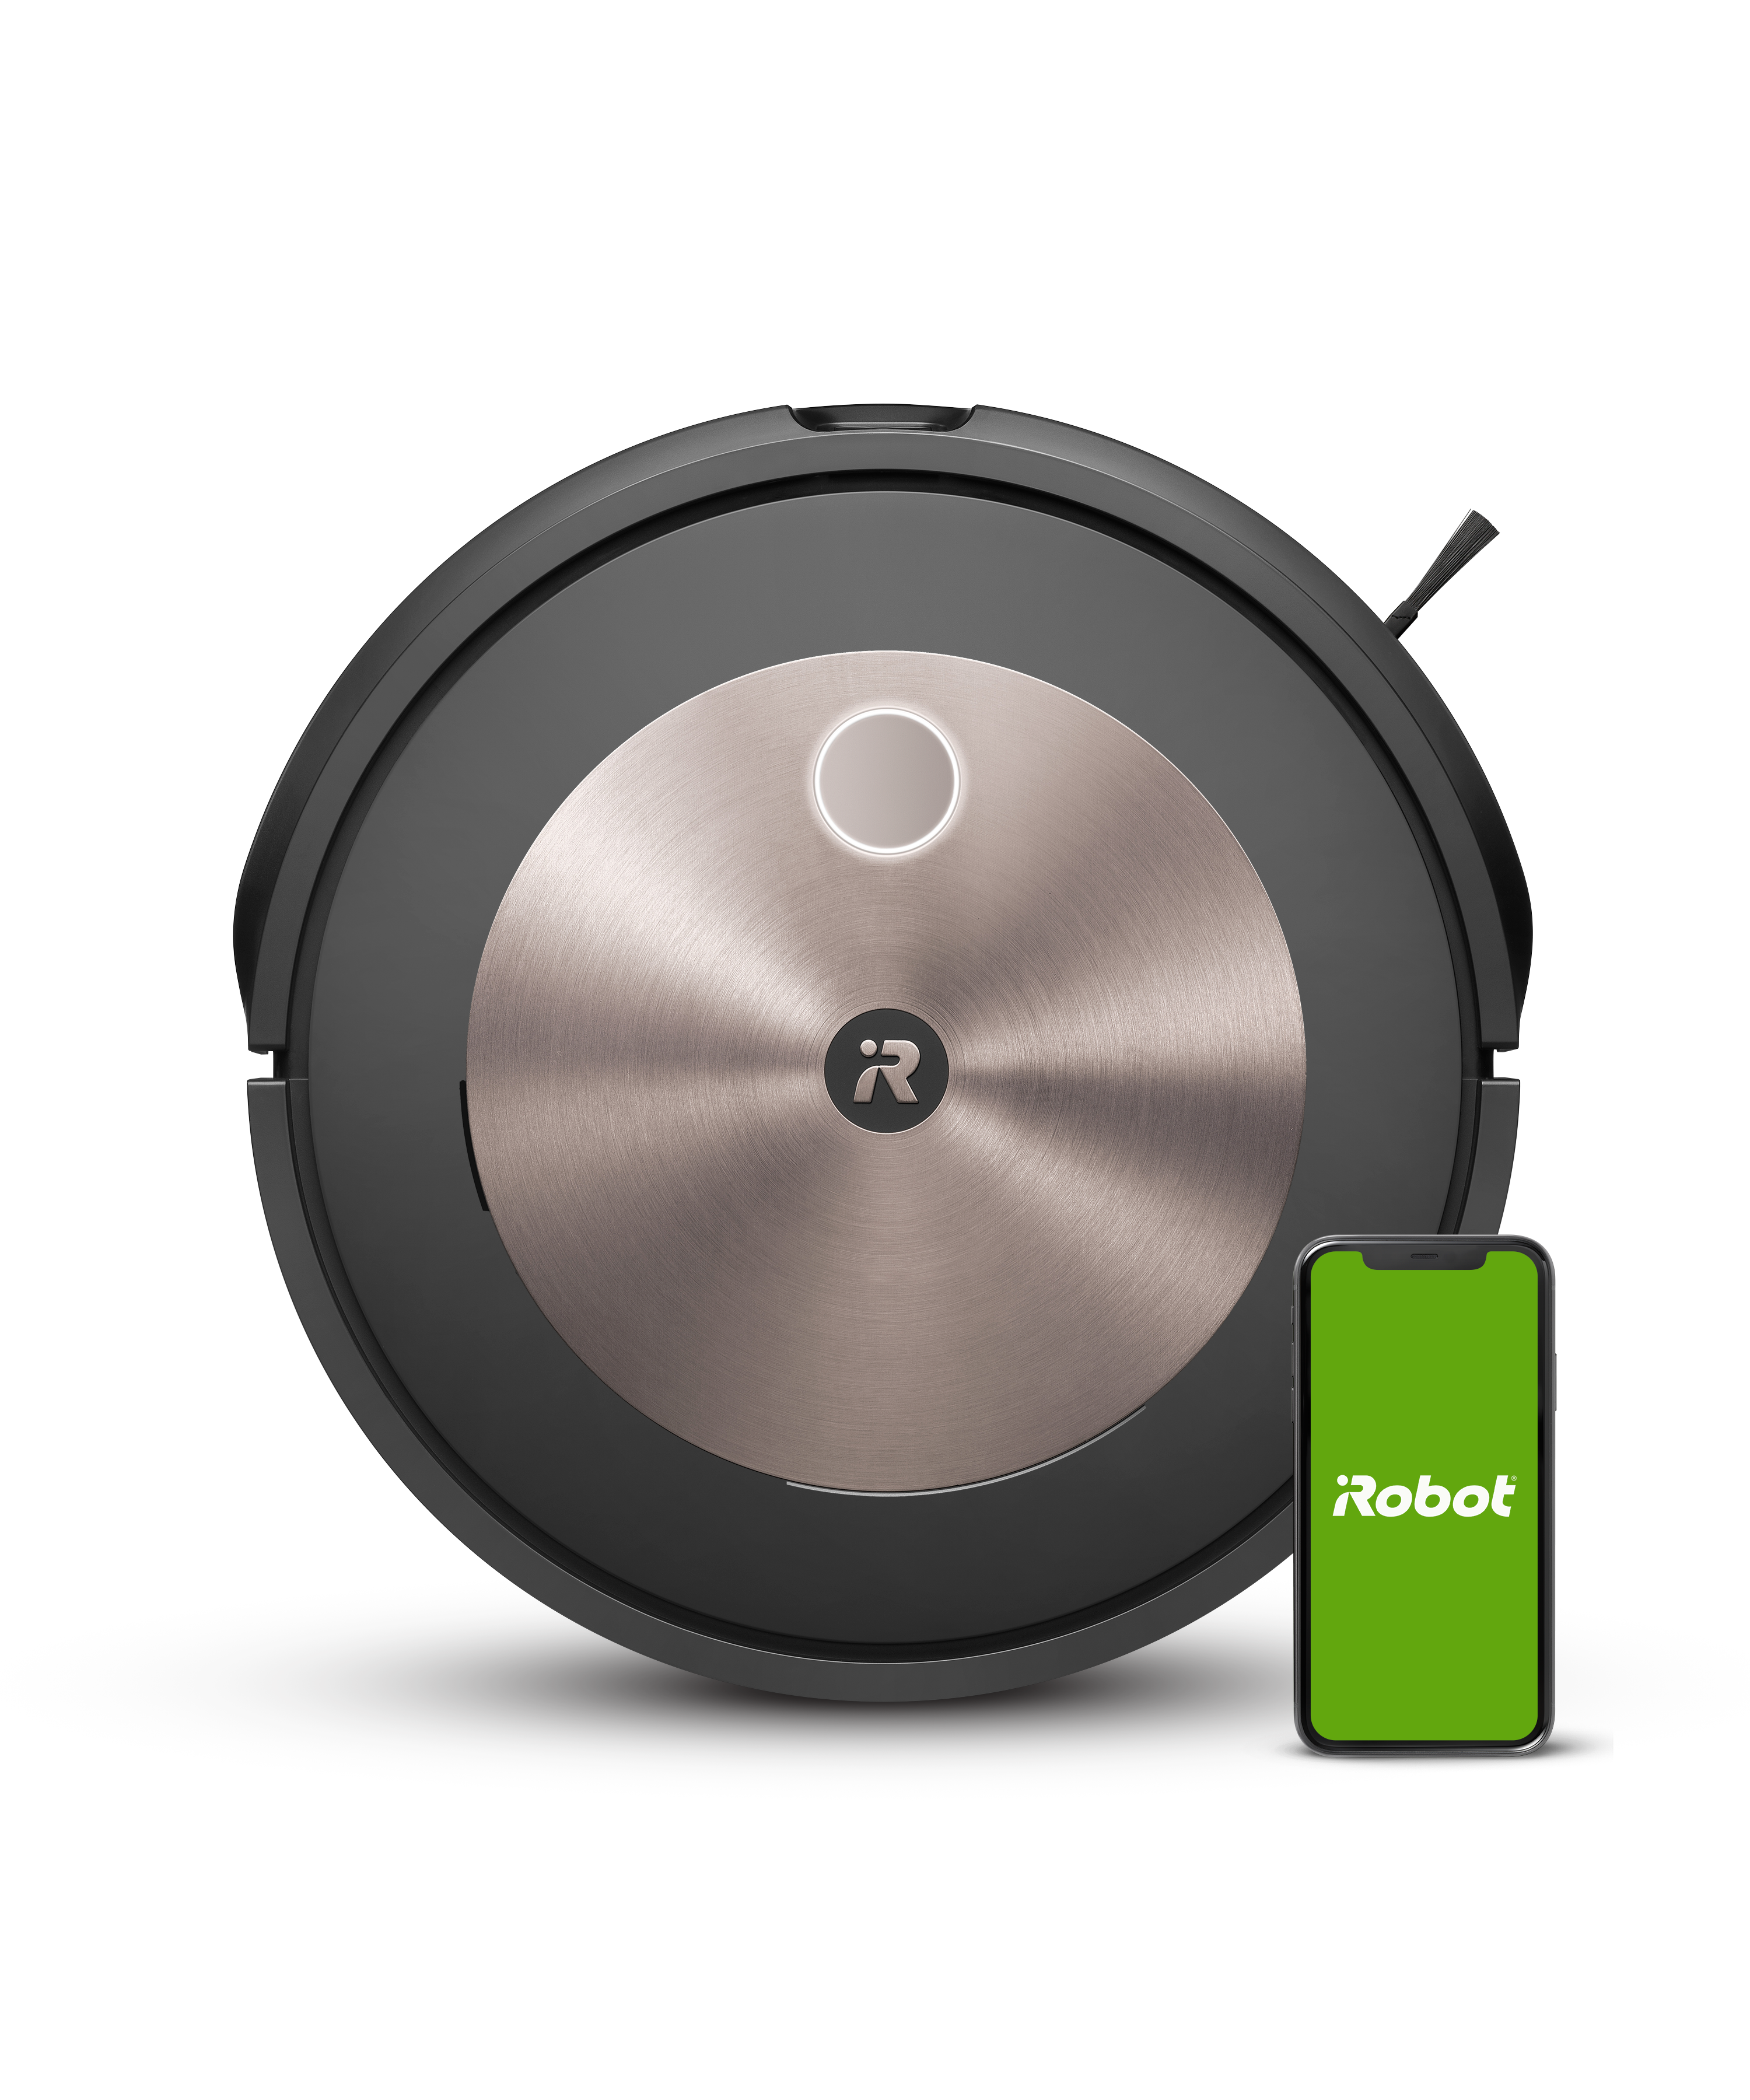 Fitro AeroVac Roomba. Spares and refills compatible iRobot Roomba